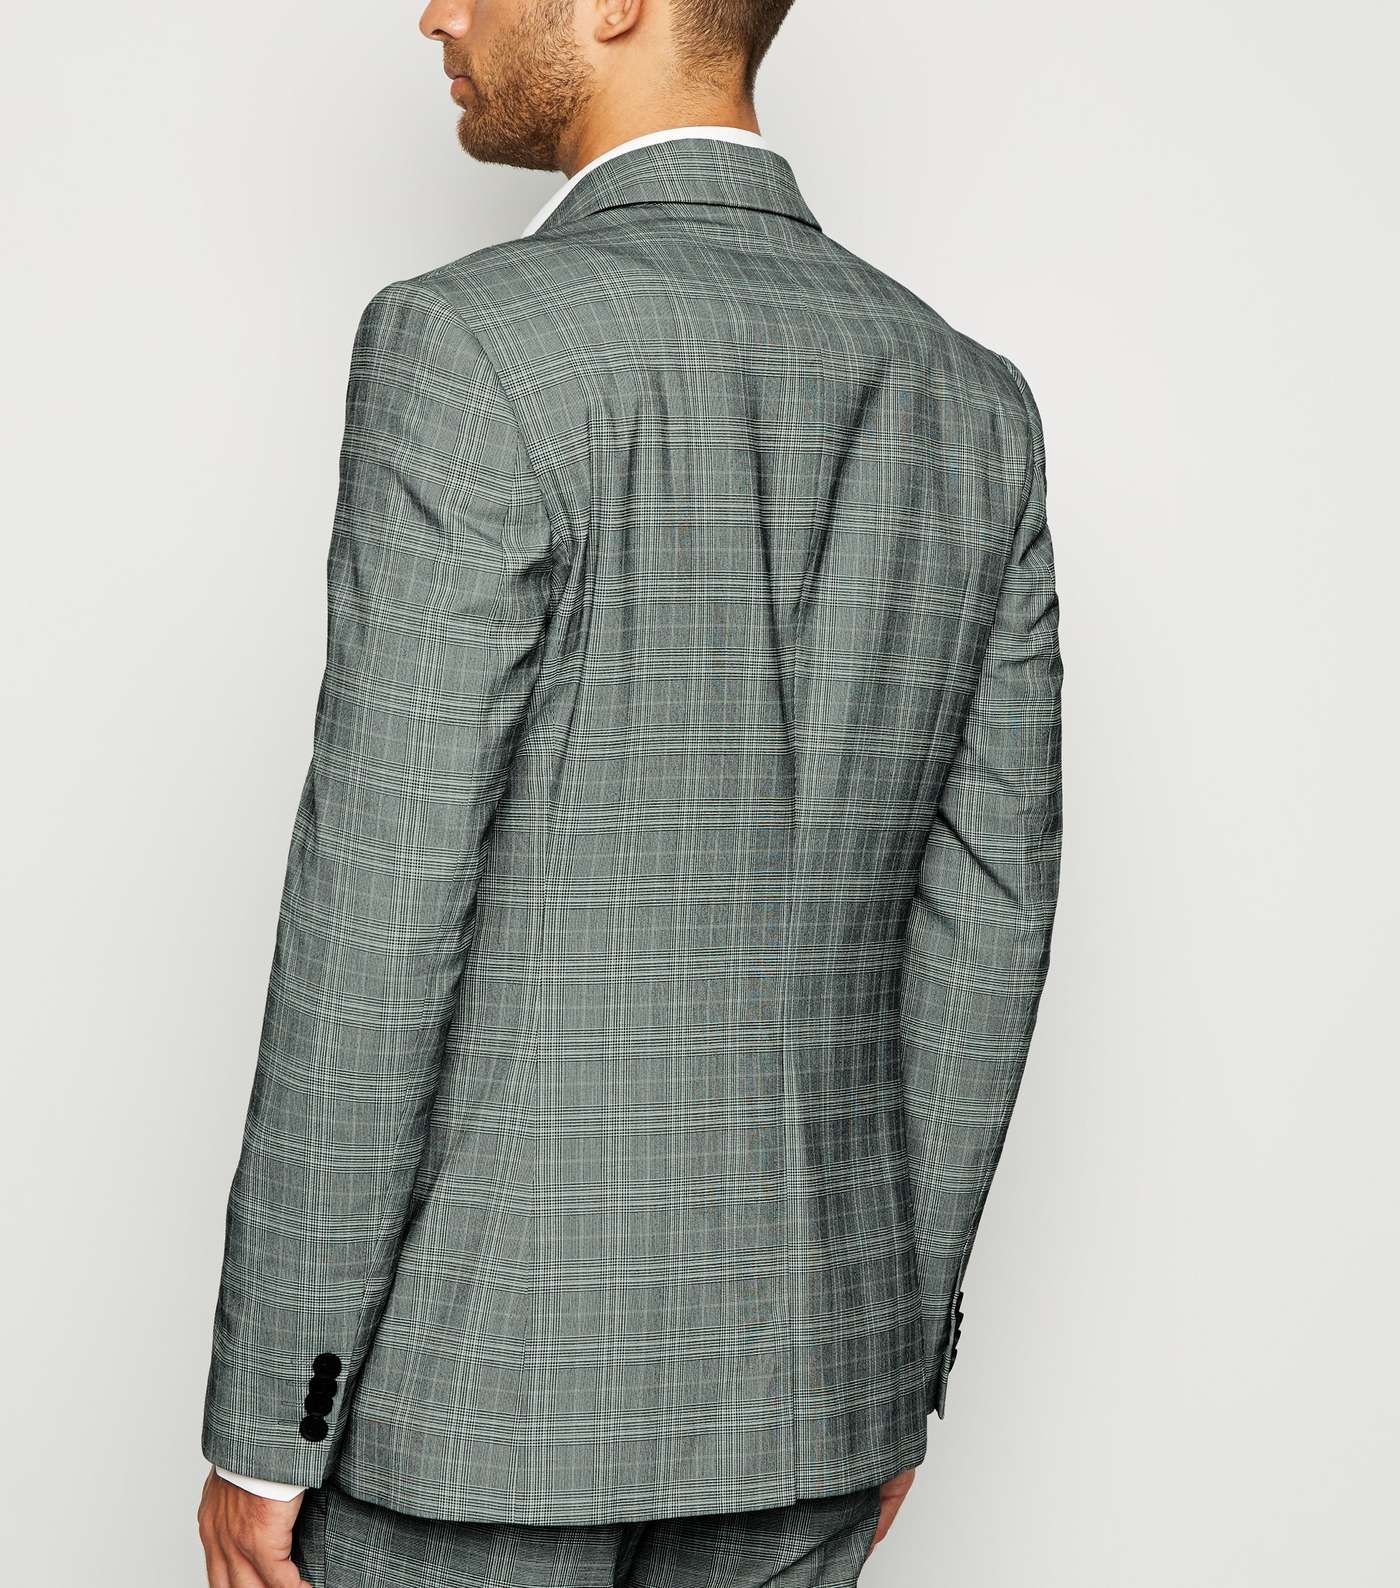 Pale Grey Check Suit Jacket Image 3